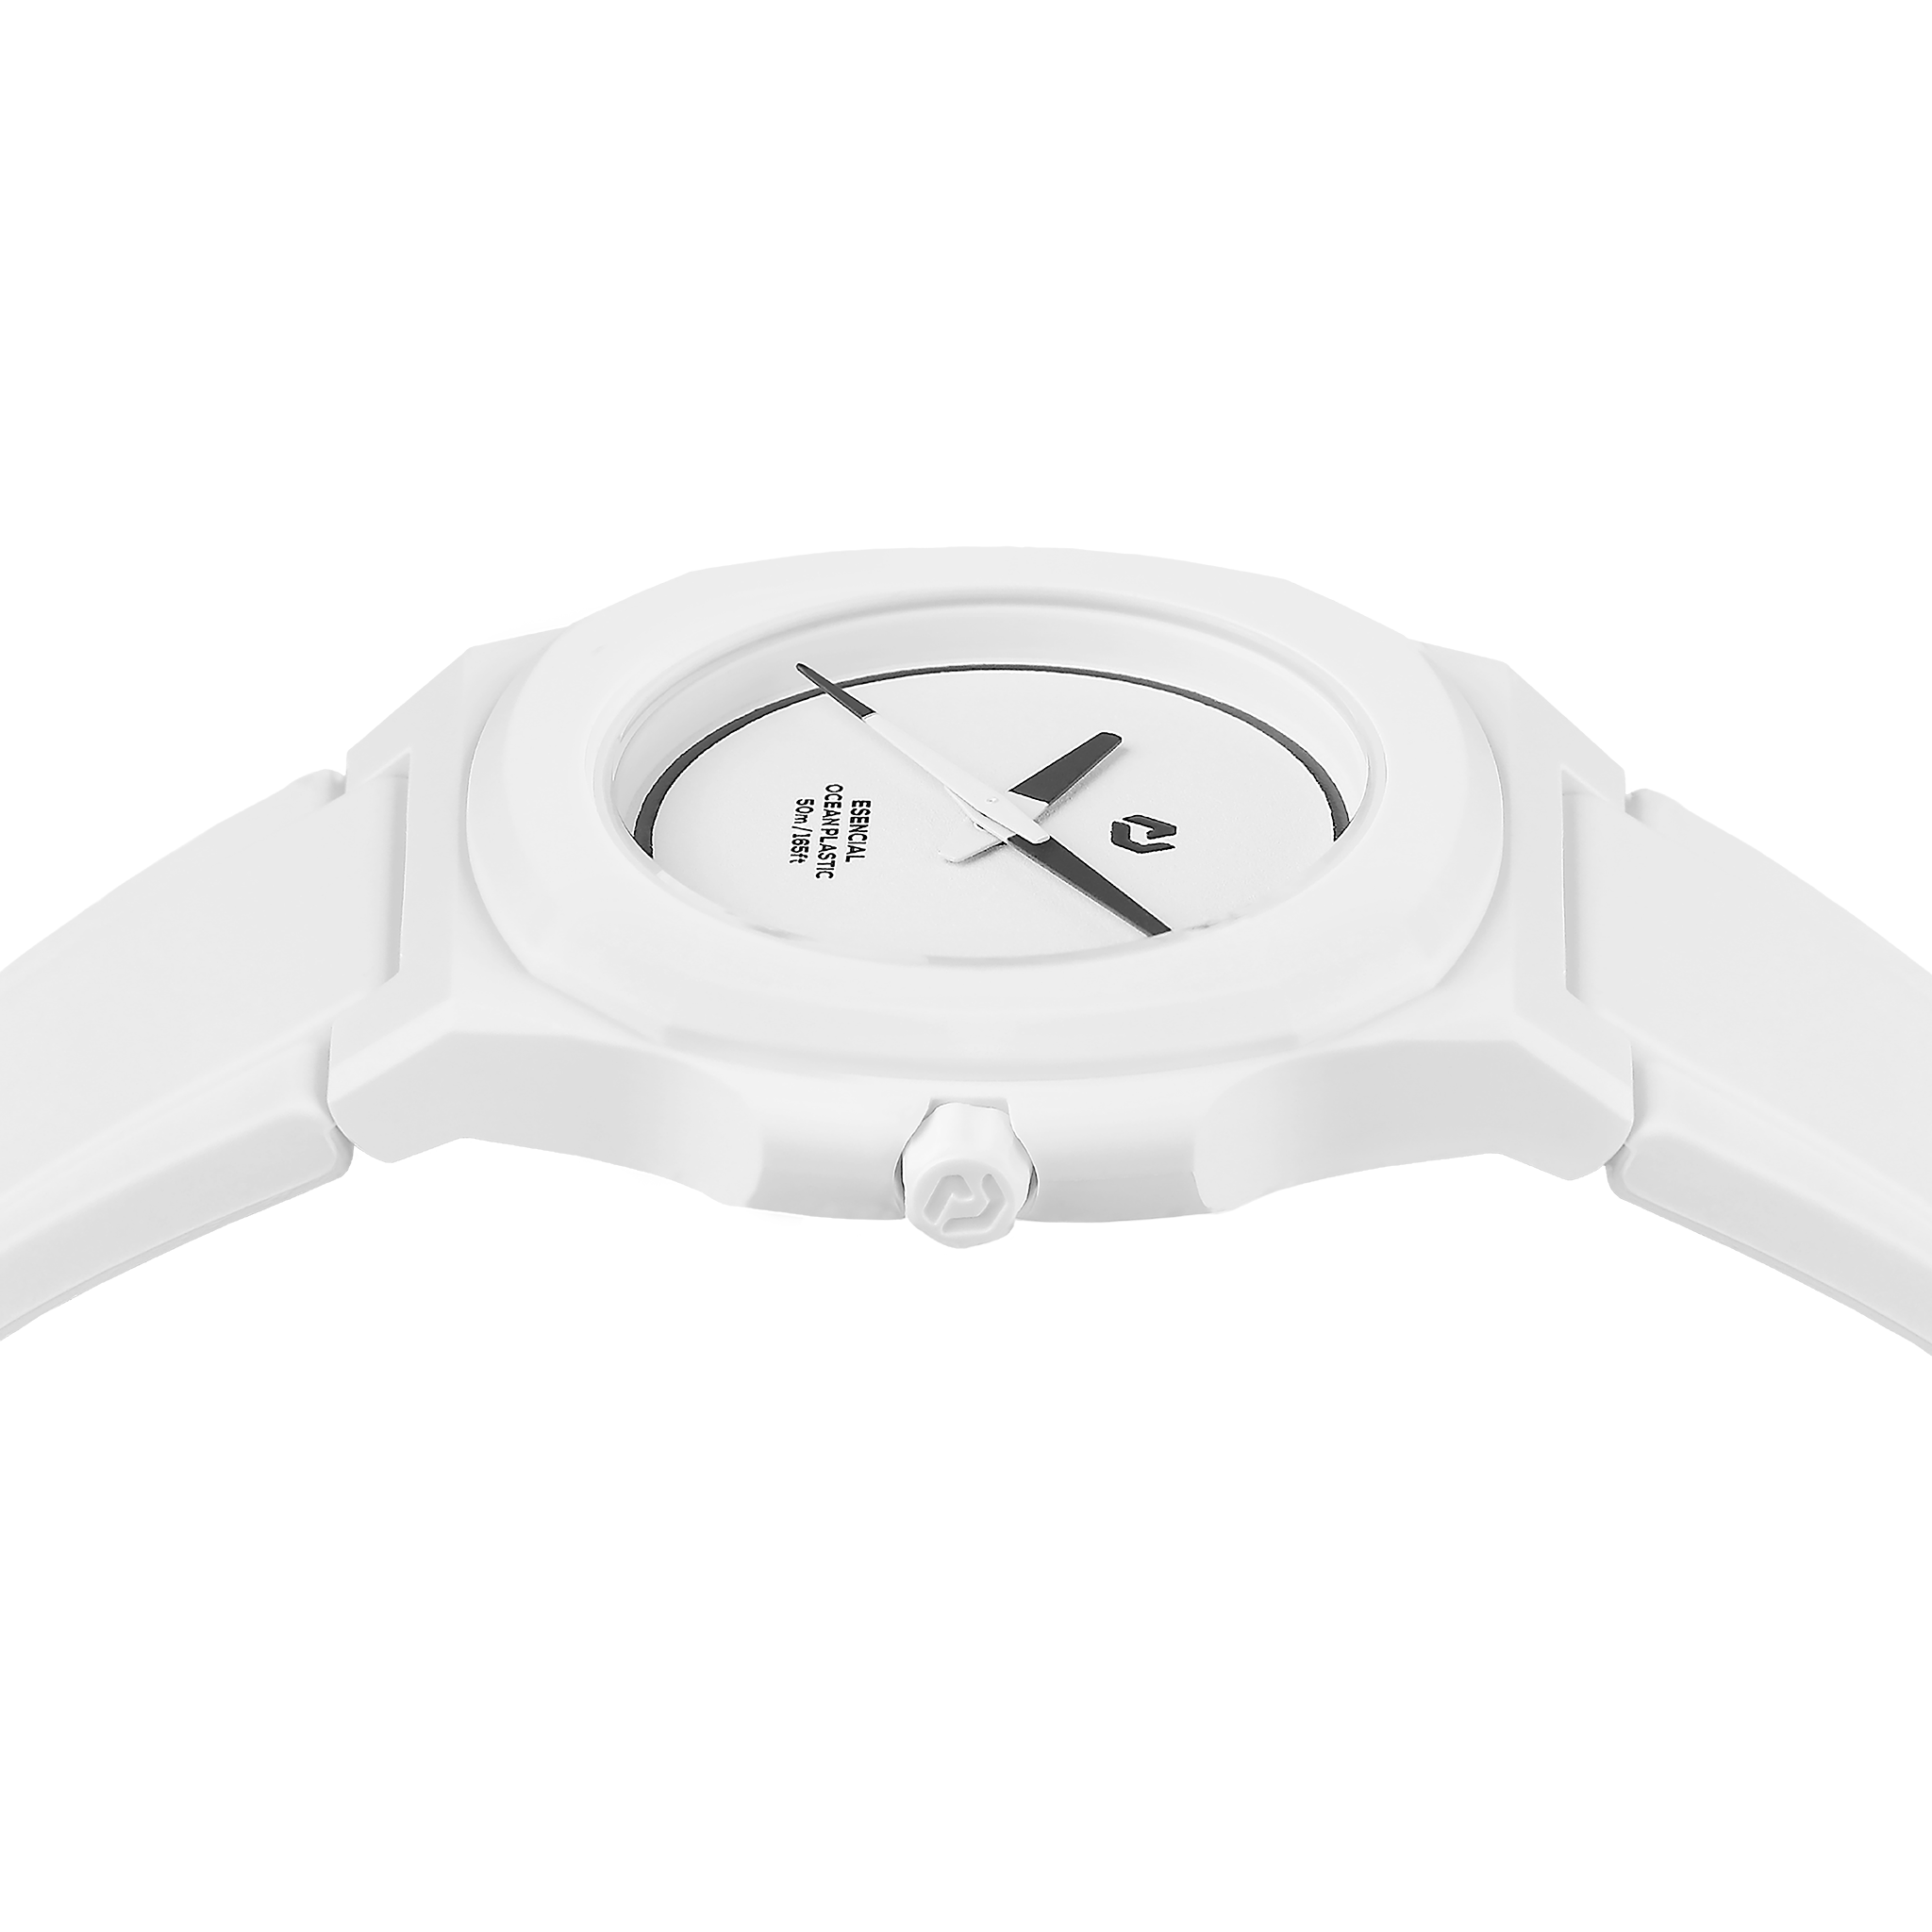 Esencial White Watch